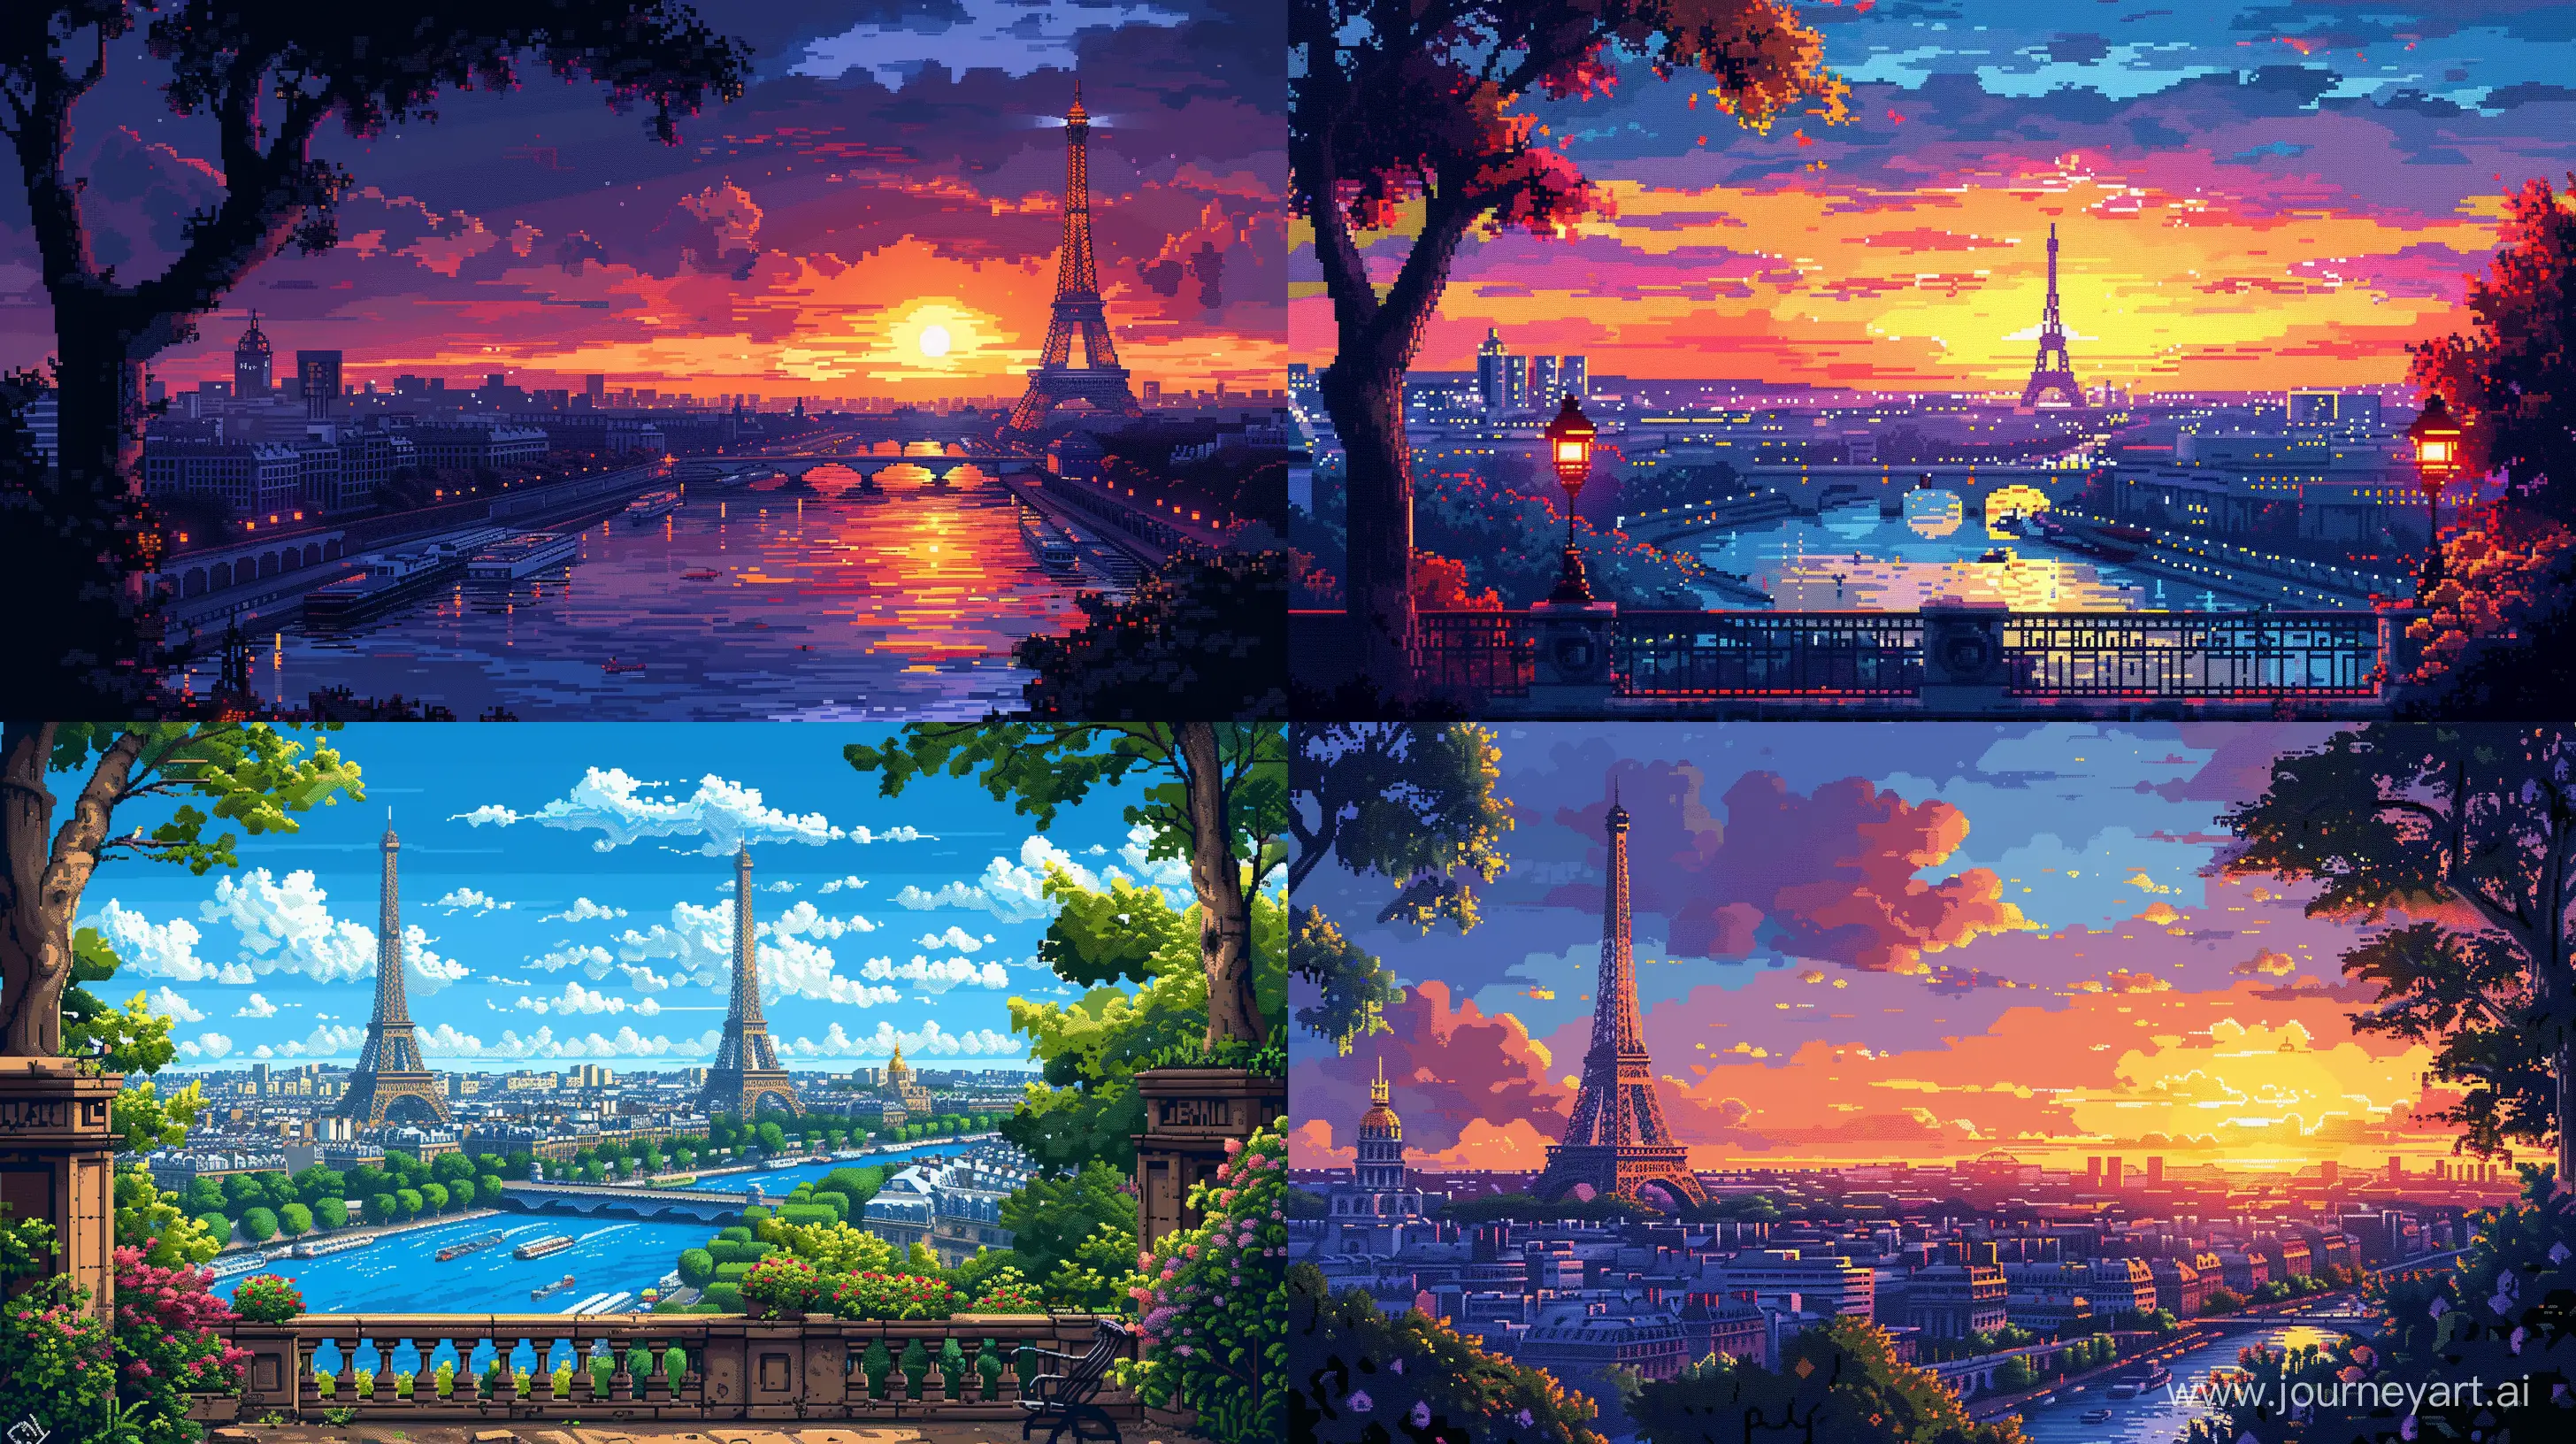 Paris-City-View-8Bit-Pixel-Art-Retro-Daytime-Scene-with-Detailed-Architecture